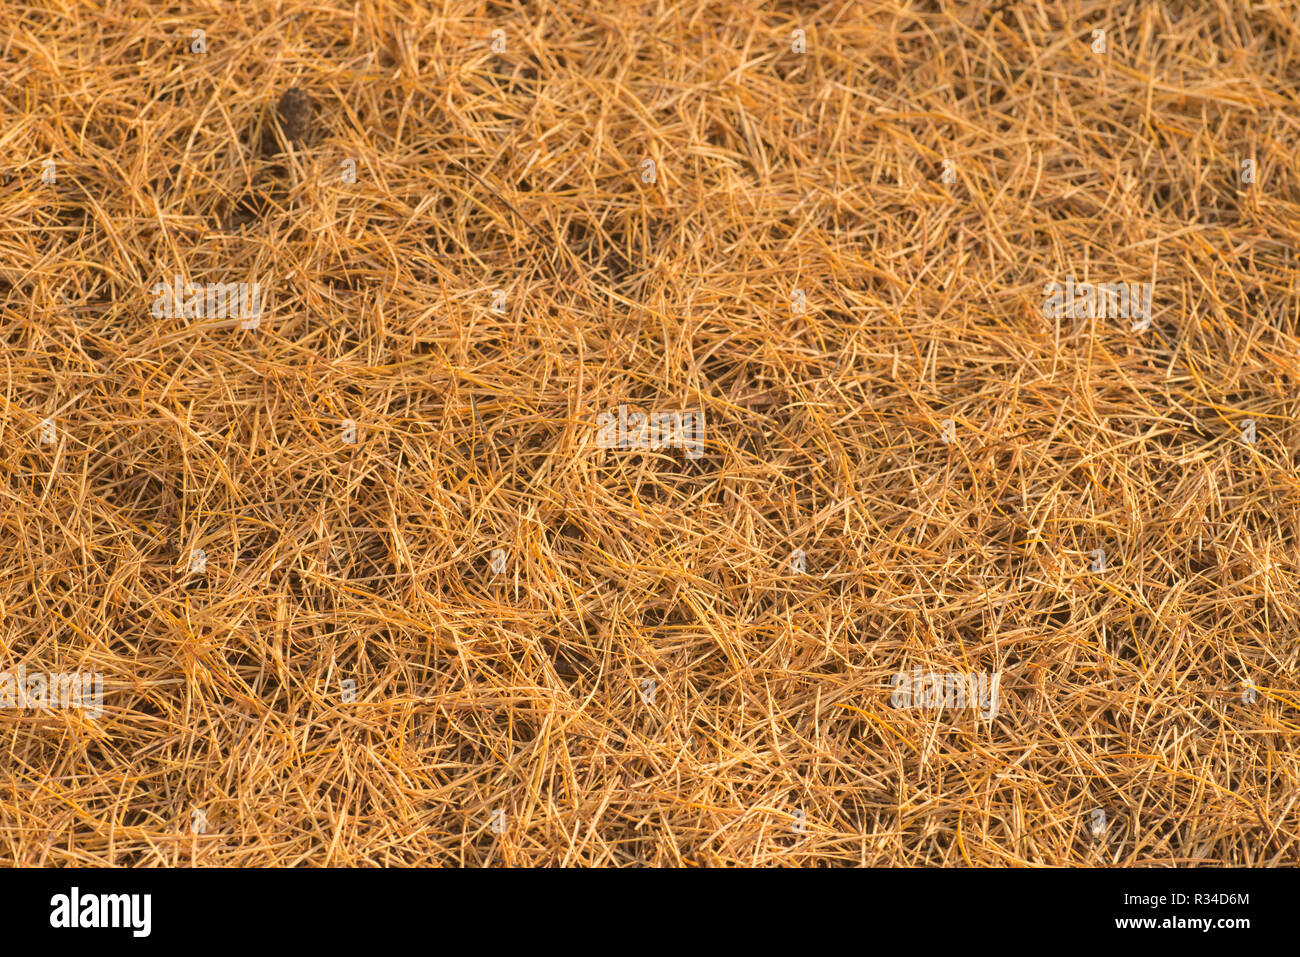 yellow fallen larch needles on ground Stock Photo